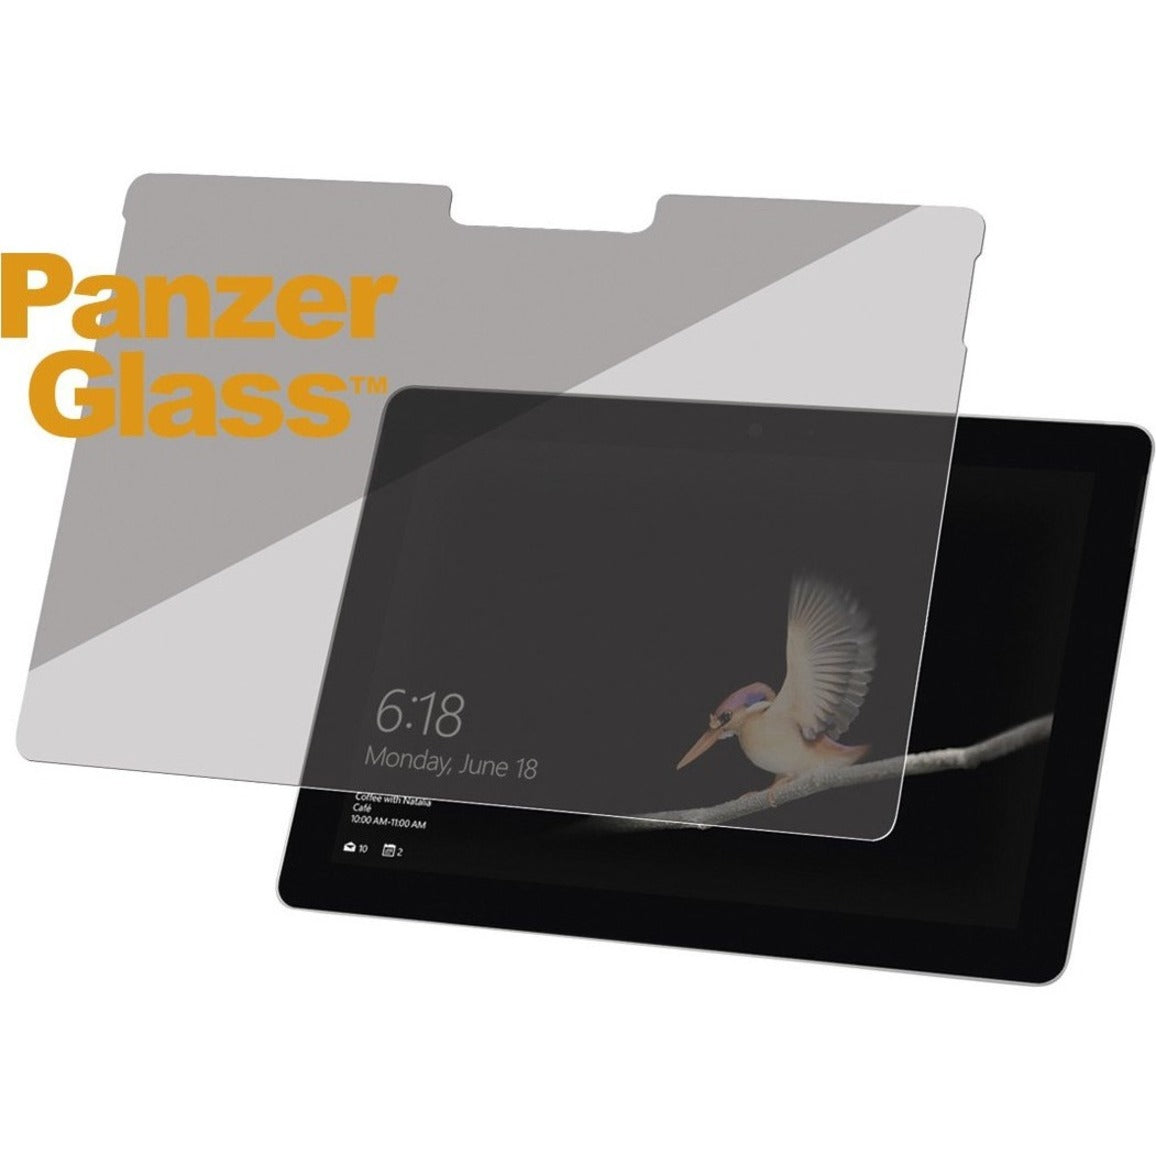 PanzerGlass P6255 Privacy Screen Filter Transparent, Anti-reflective, Touch Sensitive, Blue Light Reduction